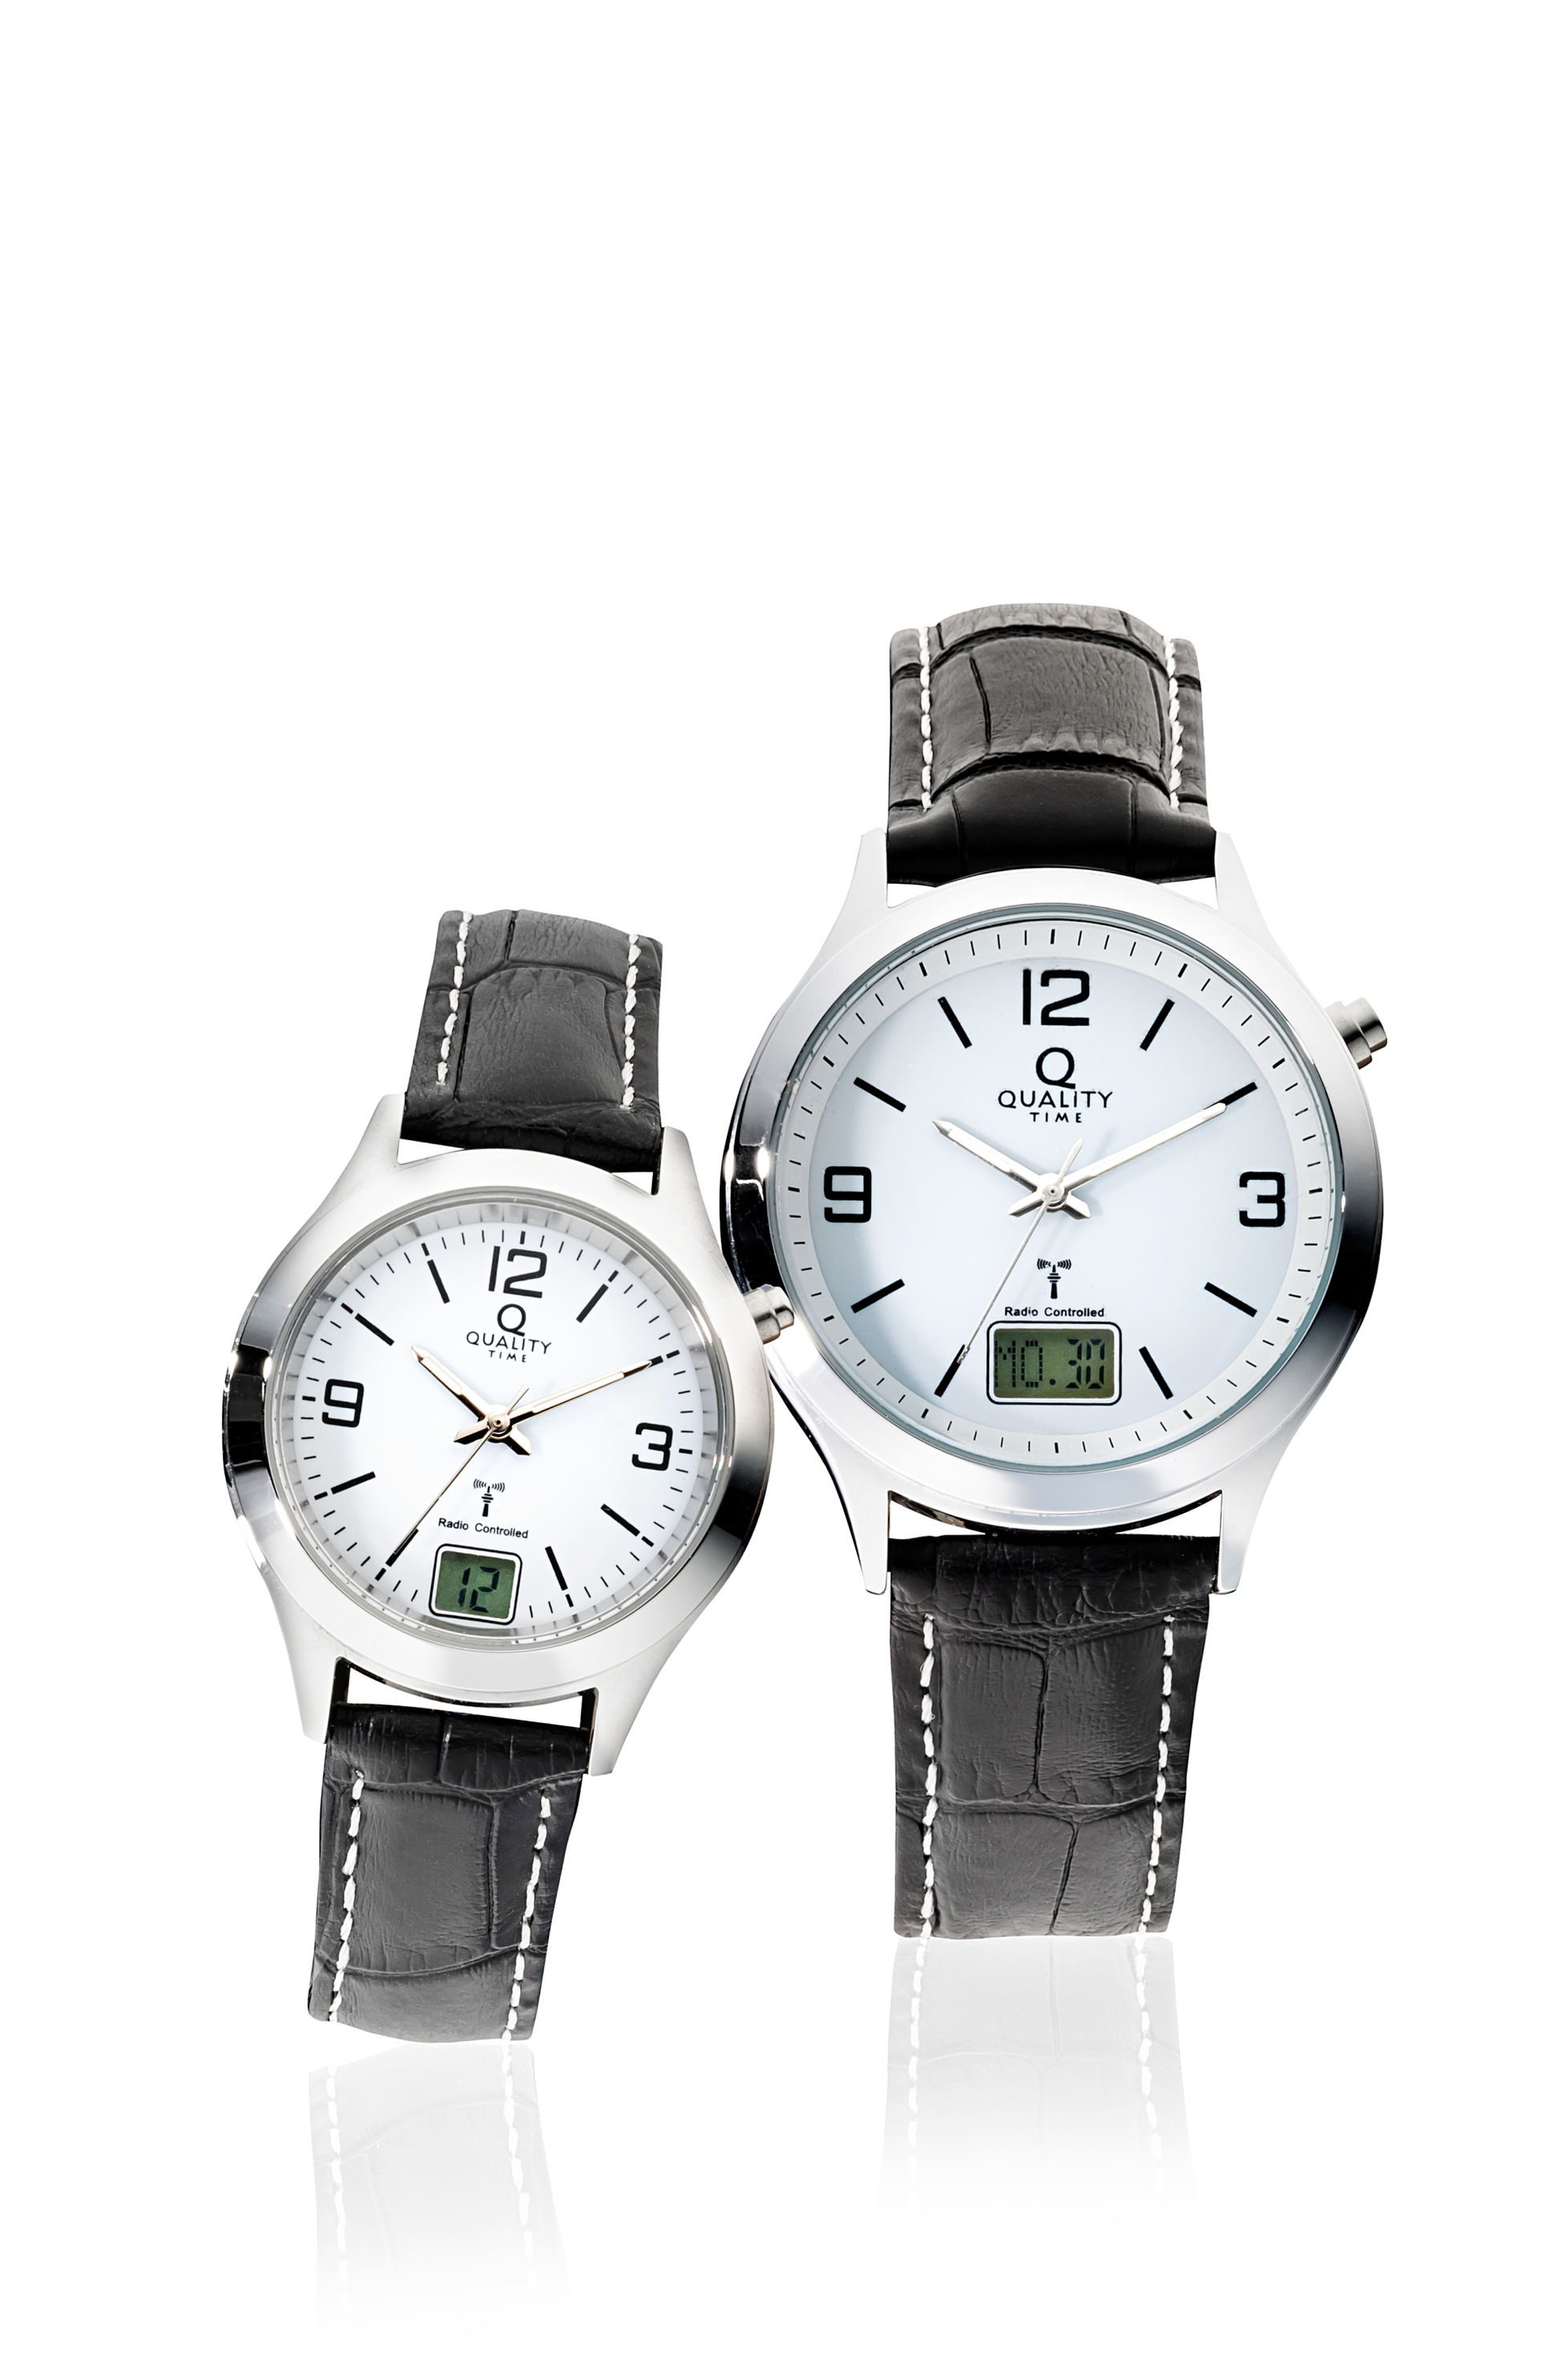 QT Funk-Armbanduhr Version: Herren bestellen | Weltbild.at